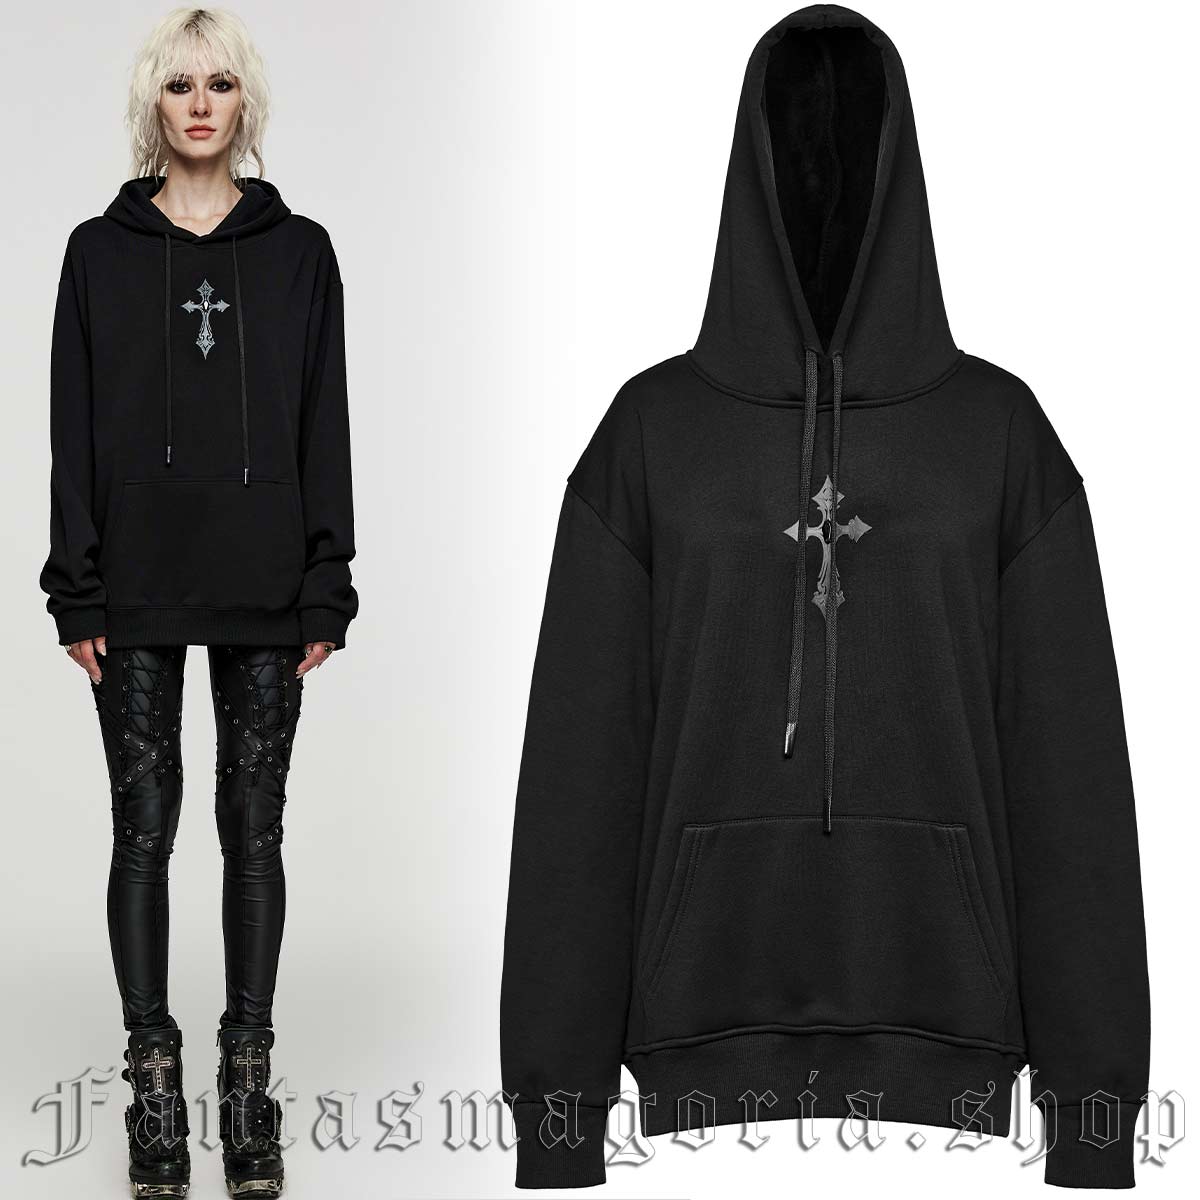 Women's Gothic black cross detail pullover hoodie. - Punk Rave - WT-839/BK